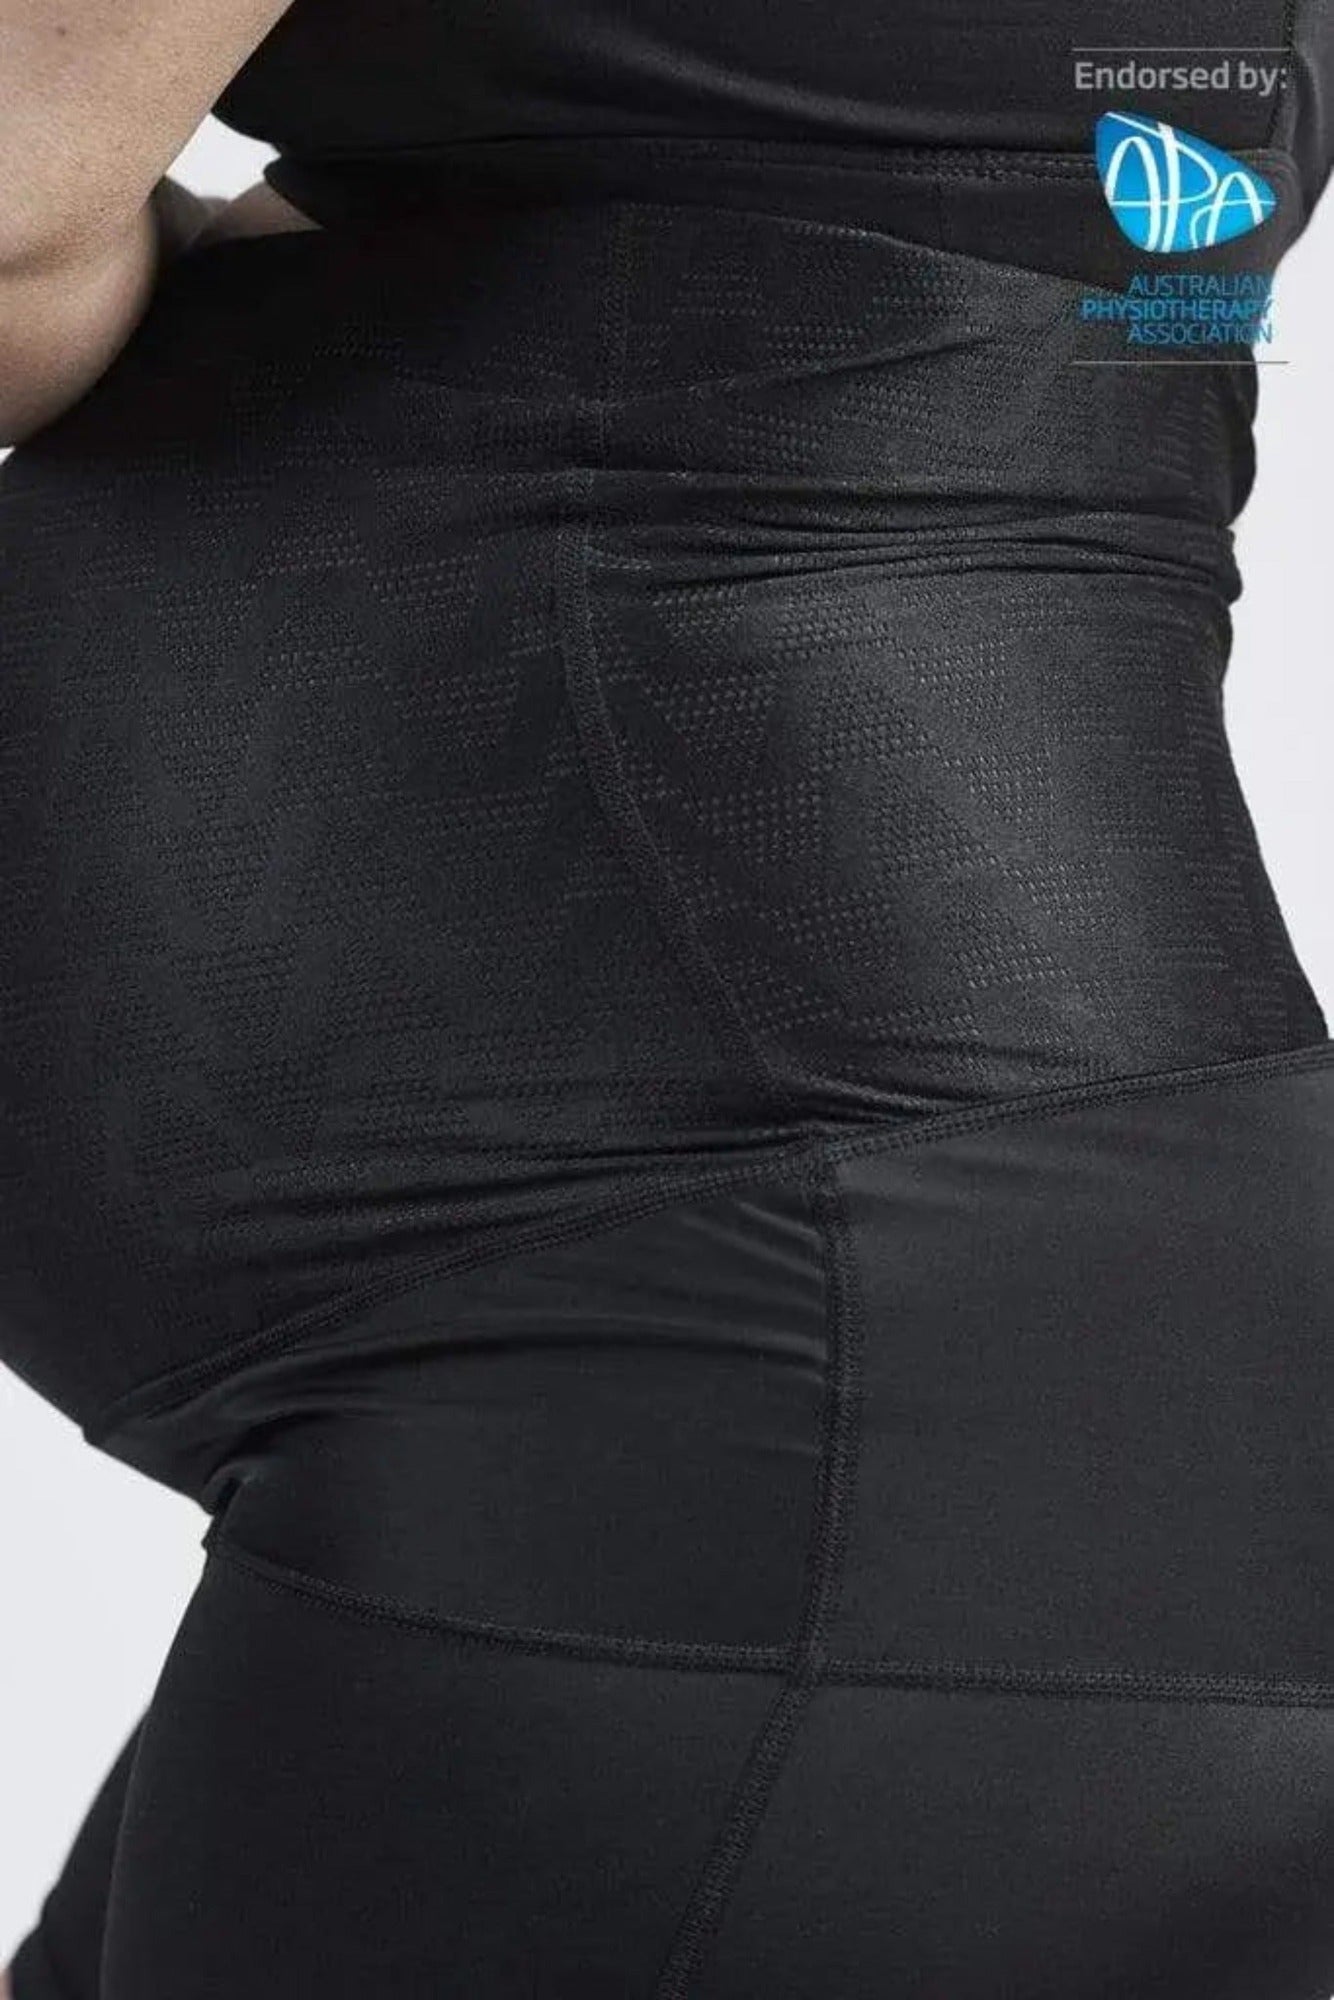 Pain management SRC Pregnancy Maternity Shorts Over The Bump (OTB) SRC Health 189.00